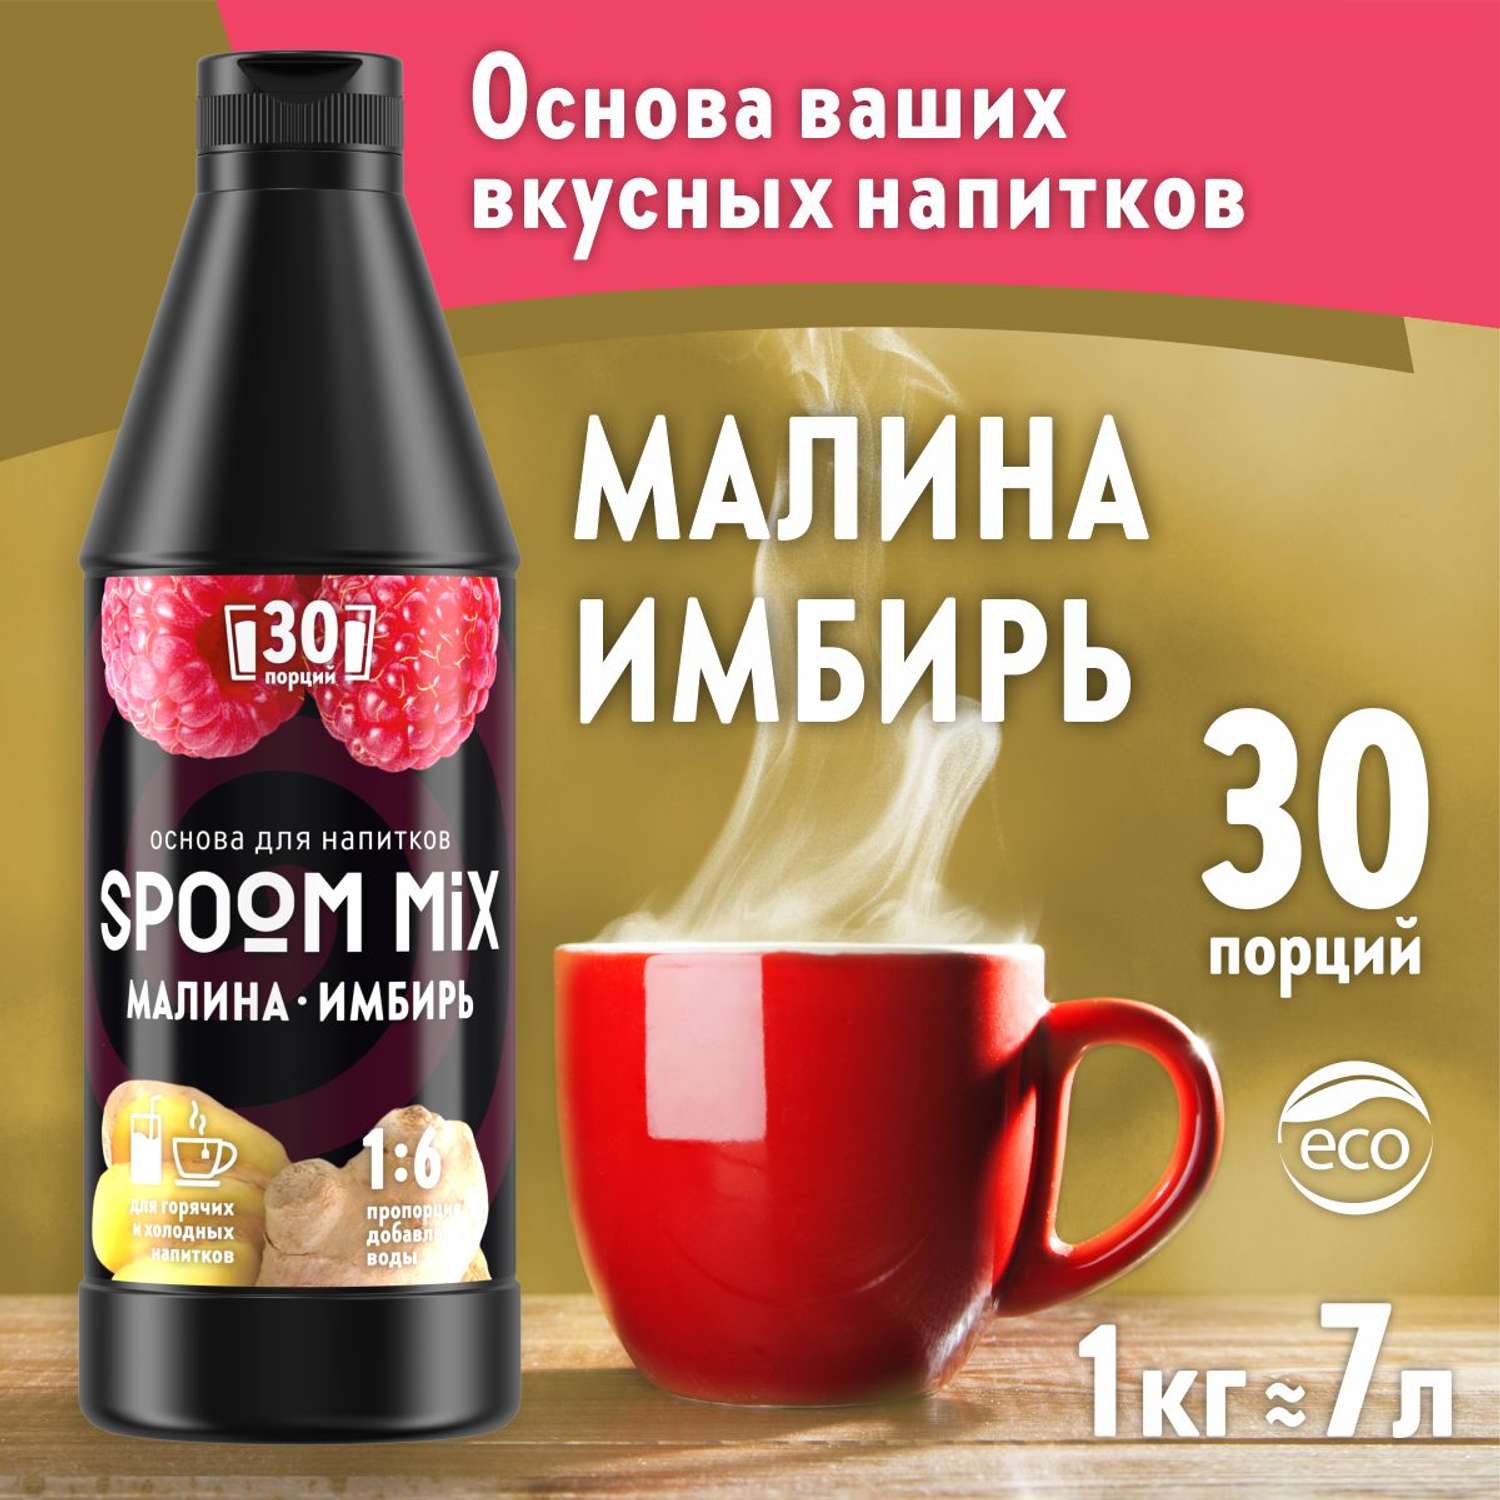 Основа для напитков SPOOM MIX Малина имбирь 1 кг - фото 1